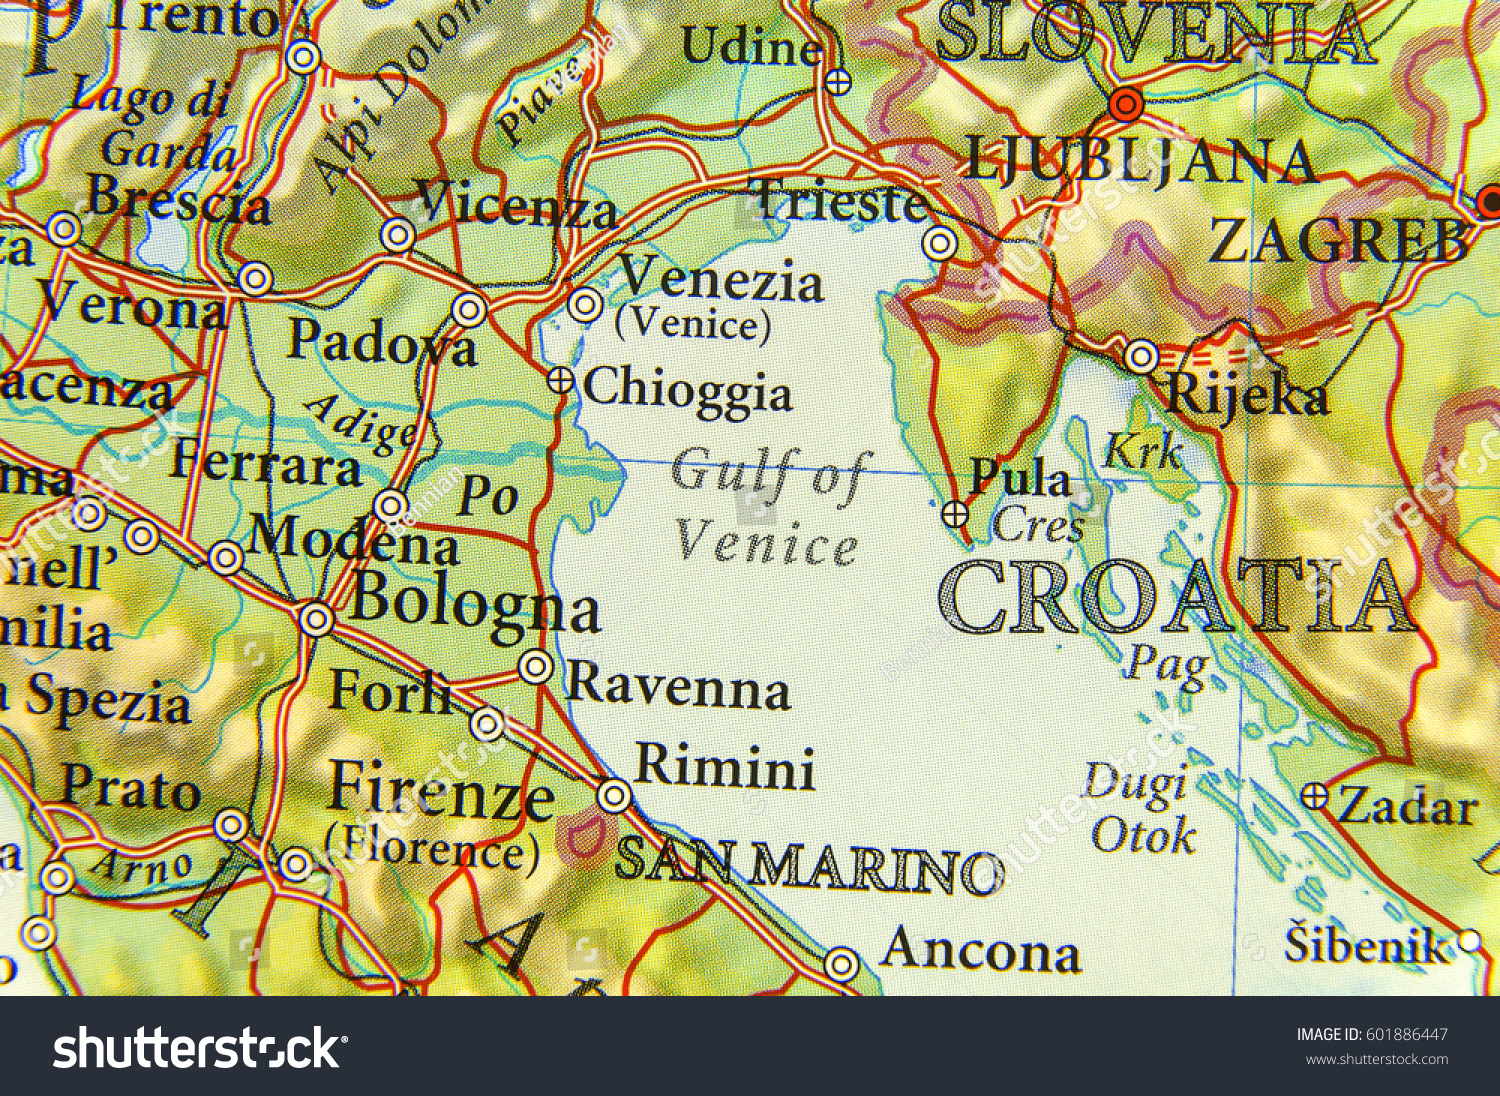 Stock Photo Geographic Map Of European Adriatic Sea Gulf Of Venice 601886447 